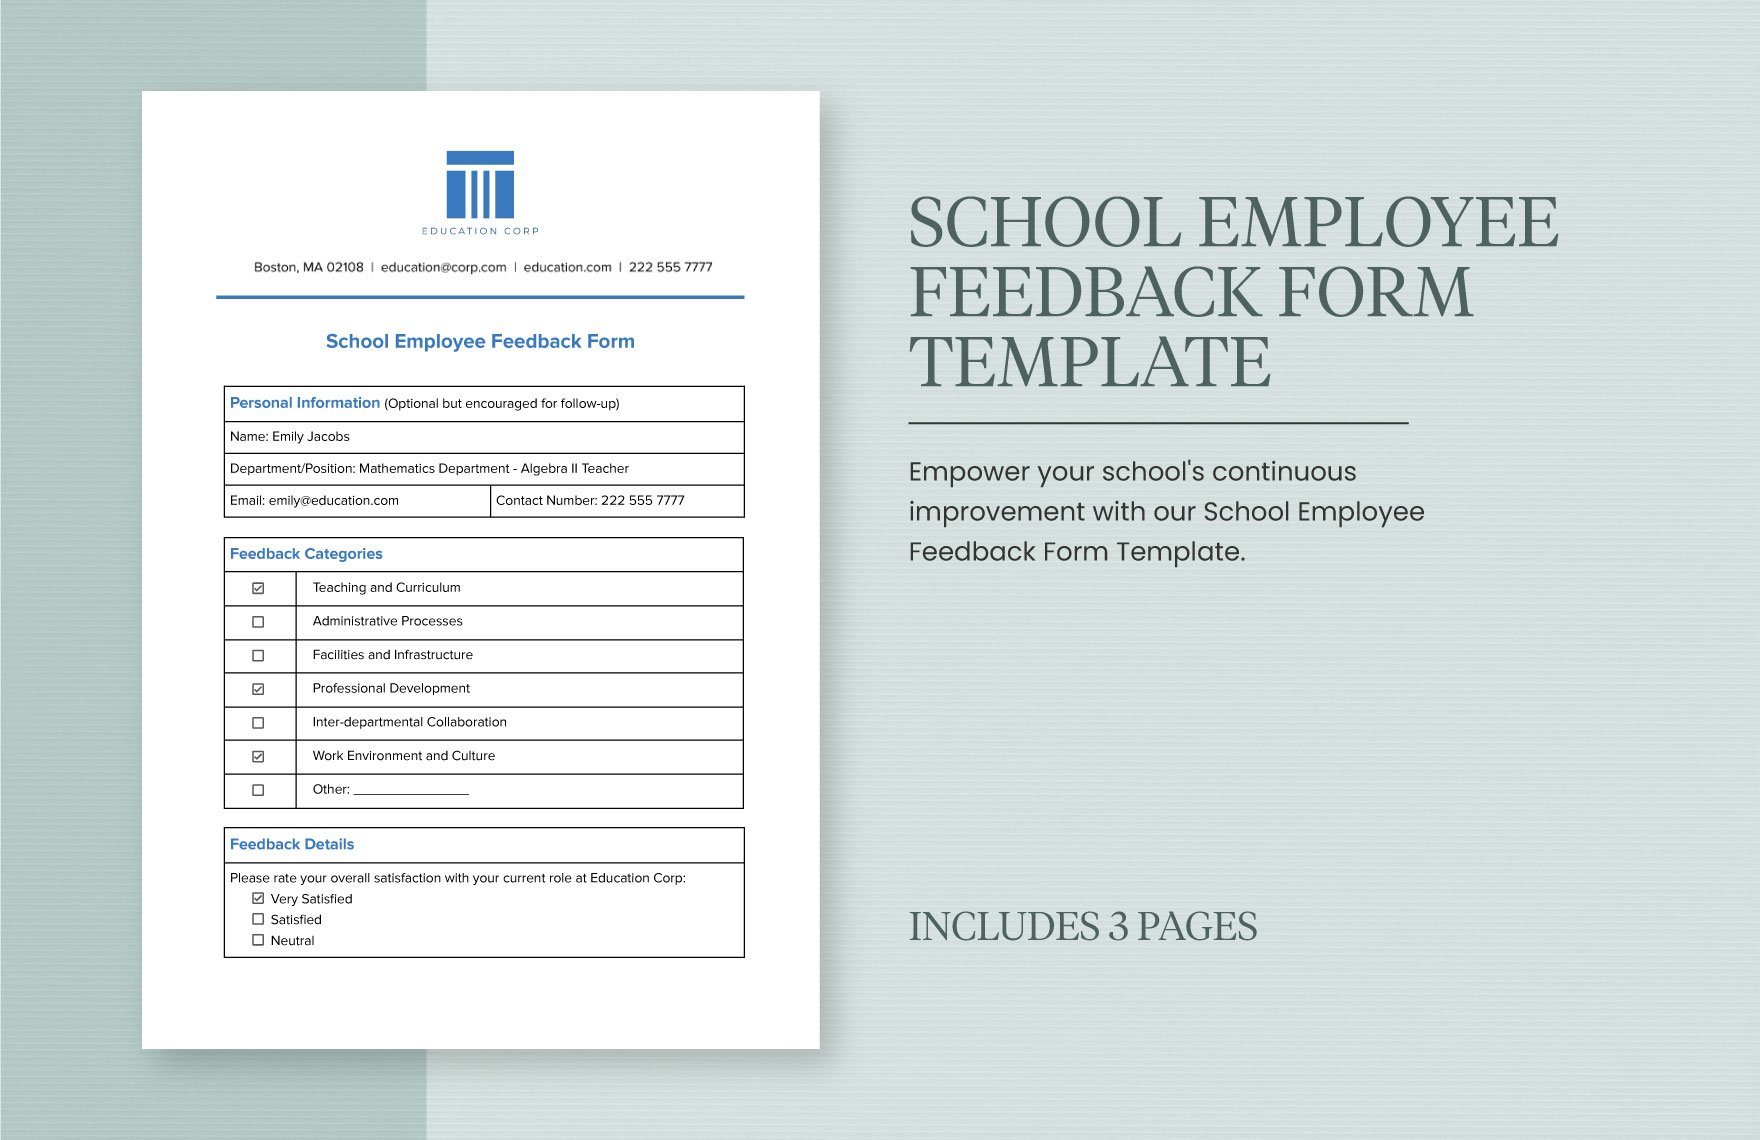 School Employee Feedback Form Template in Word, Google Docs, PDF